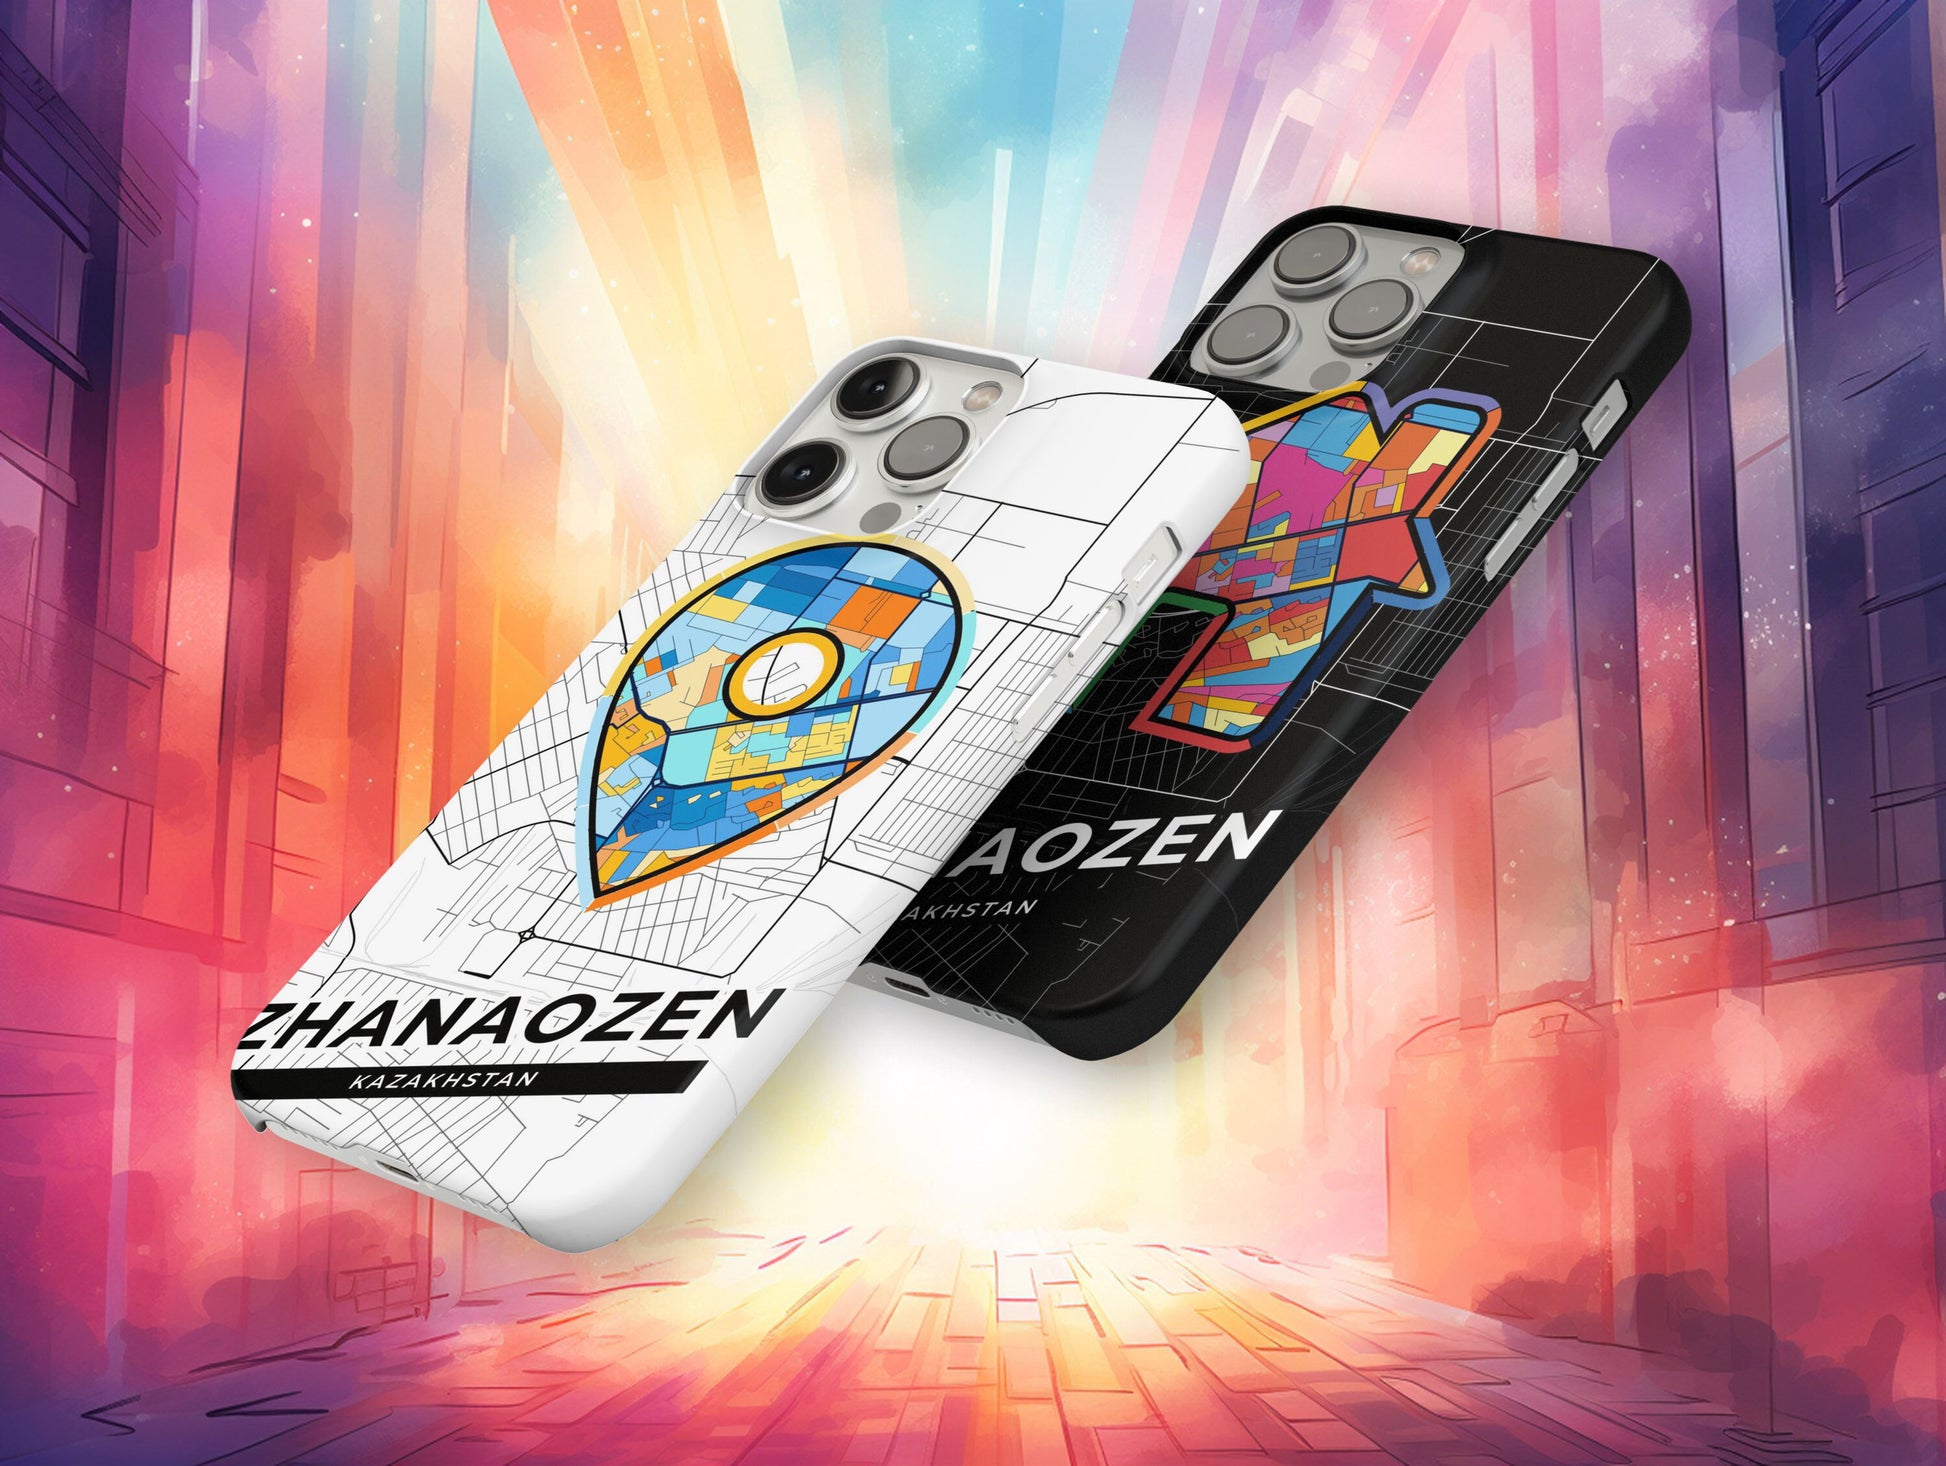 Zhanaozen Kazakhstan slim phone case with colorful icon